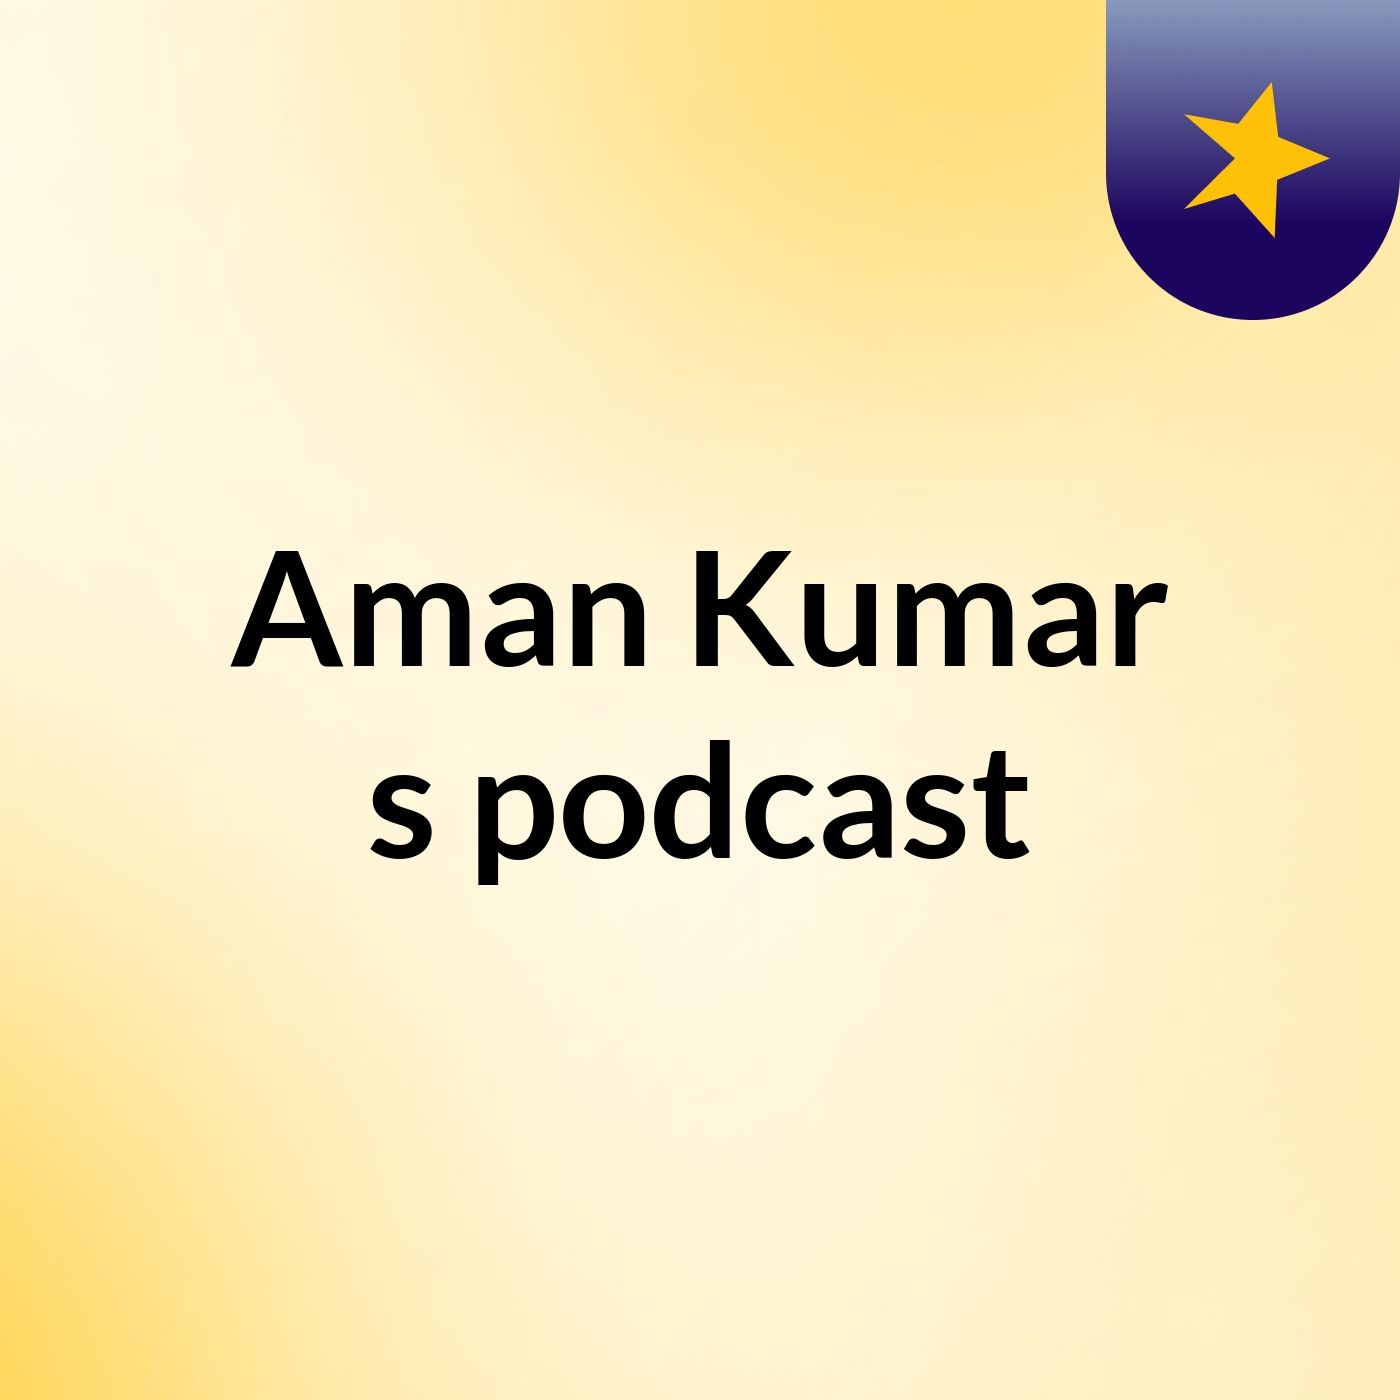 Episode 2 - Aman Kumar's podcast